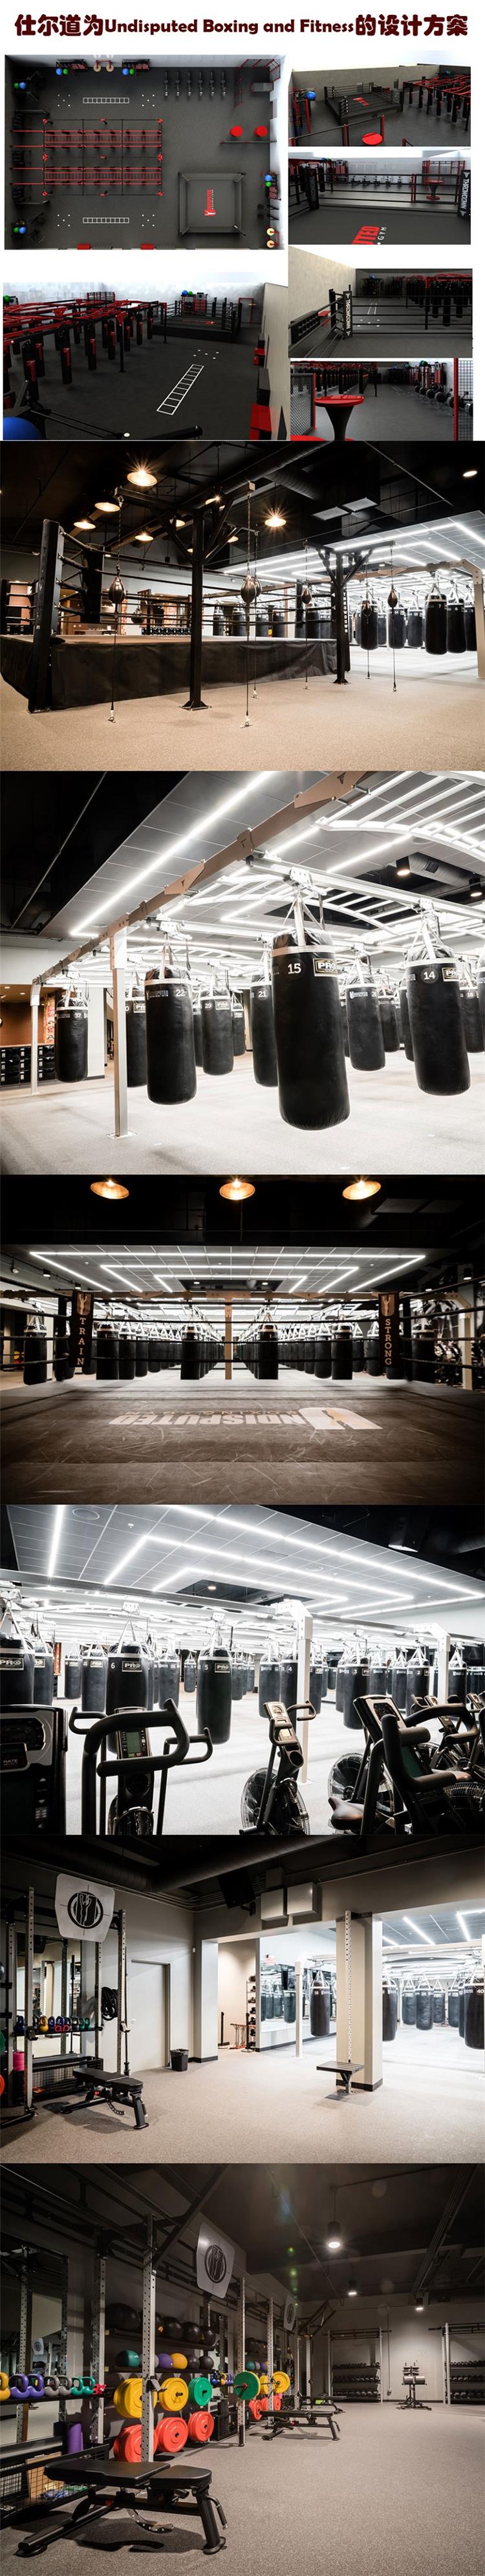 仕尔道为美国Undisputed-Boxing-and-Fitness的整体设计案和实景图.jpg